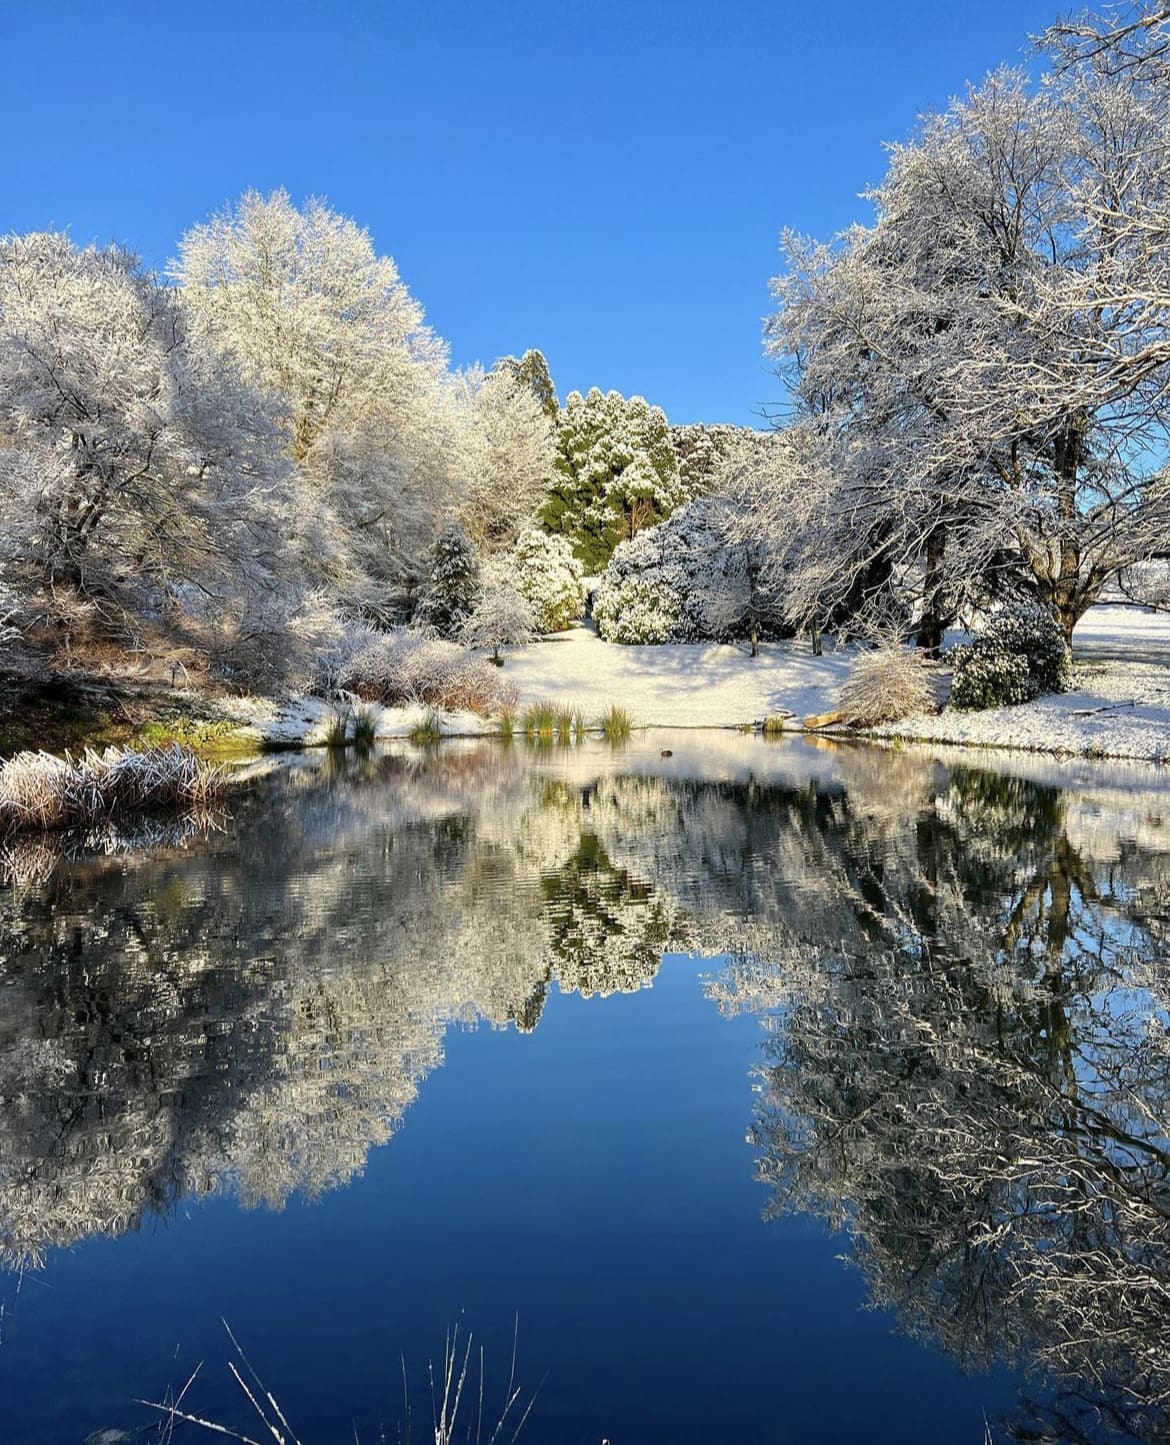 Hillandale Gardens, Australia in winter